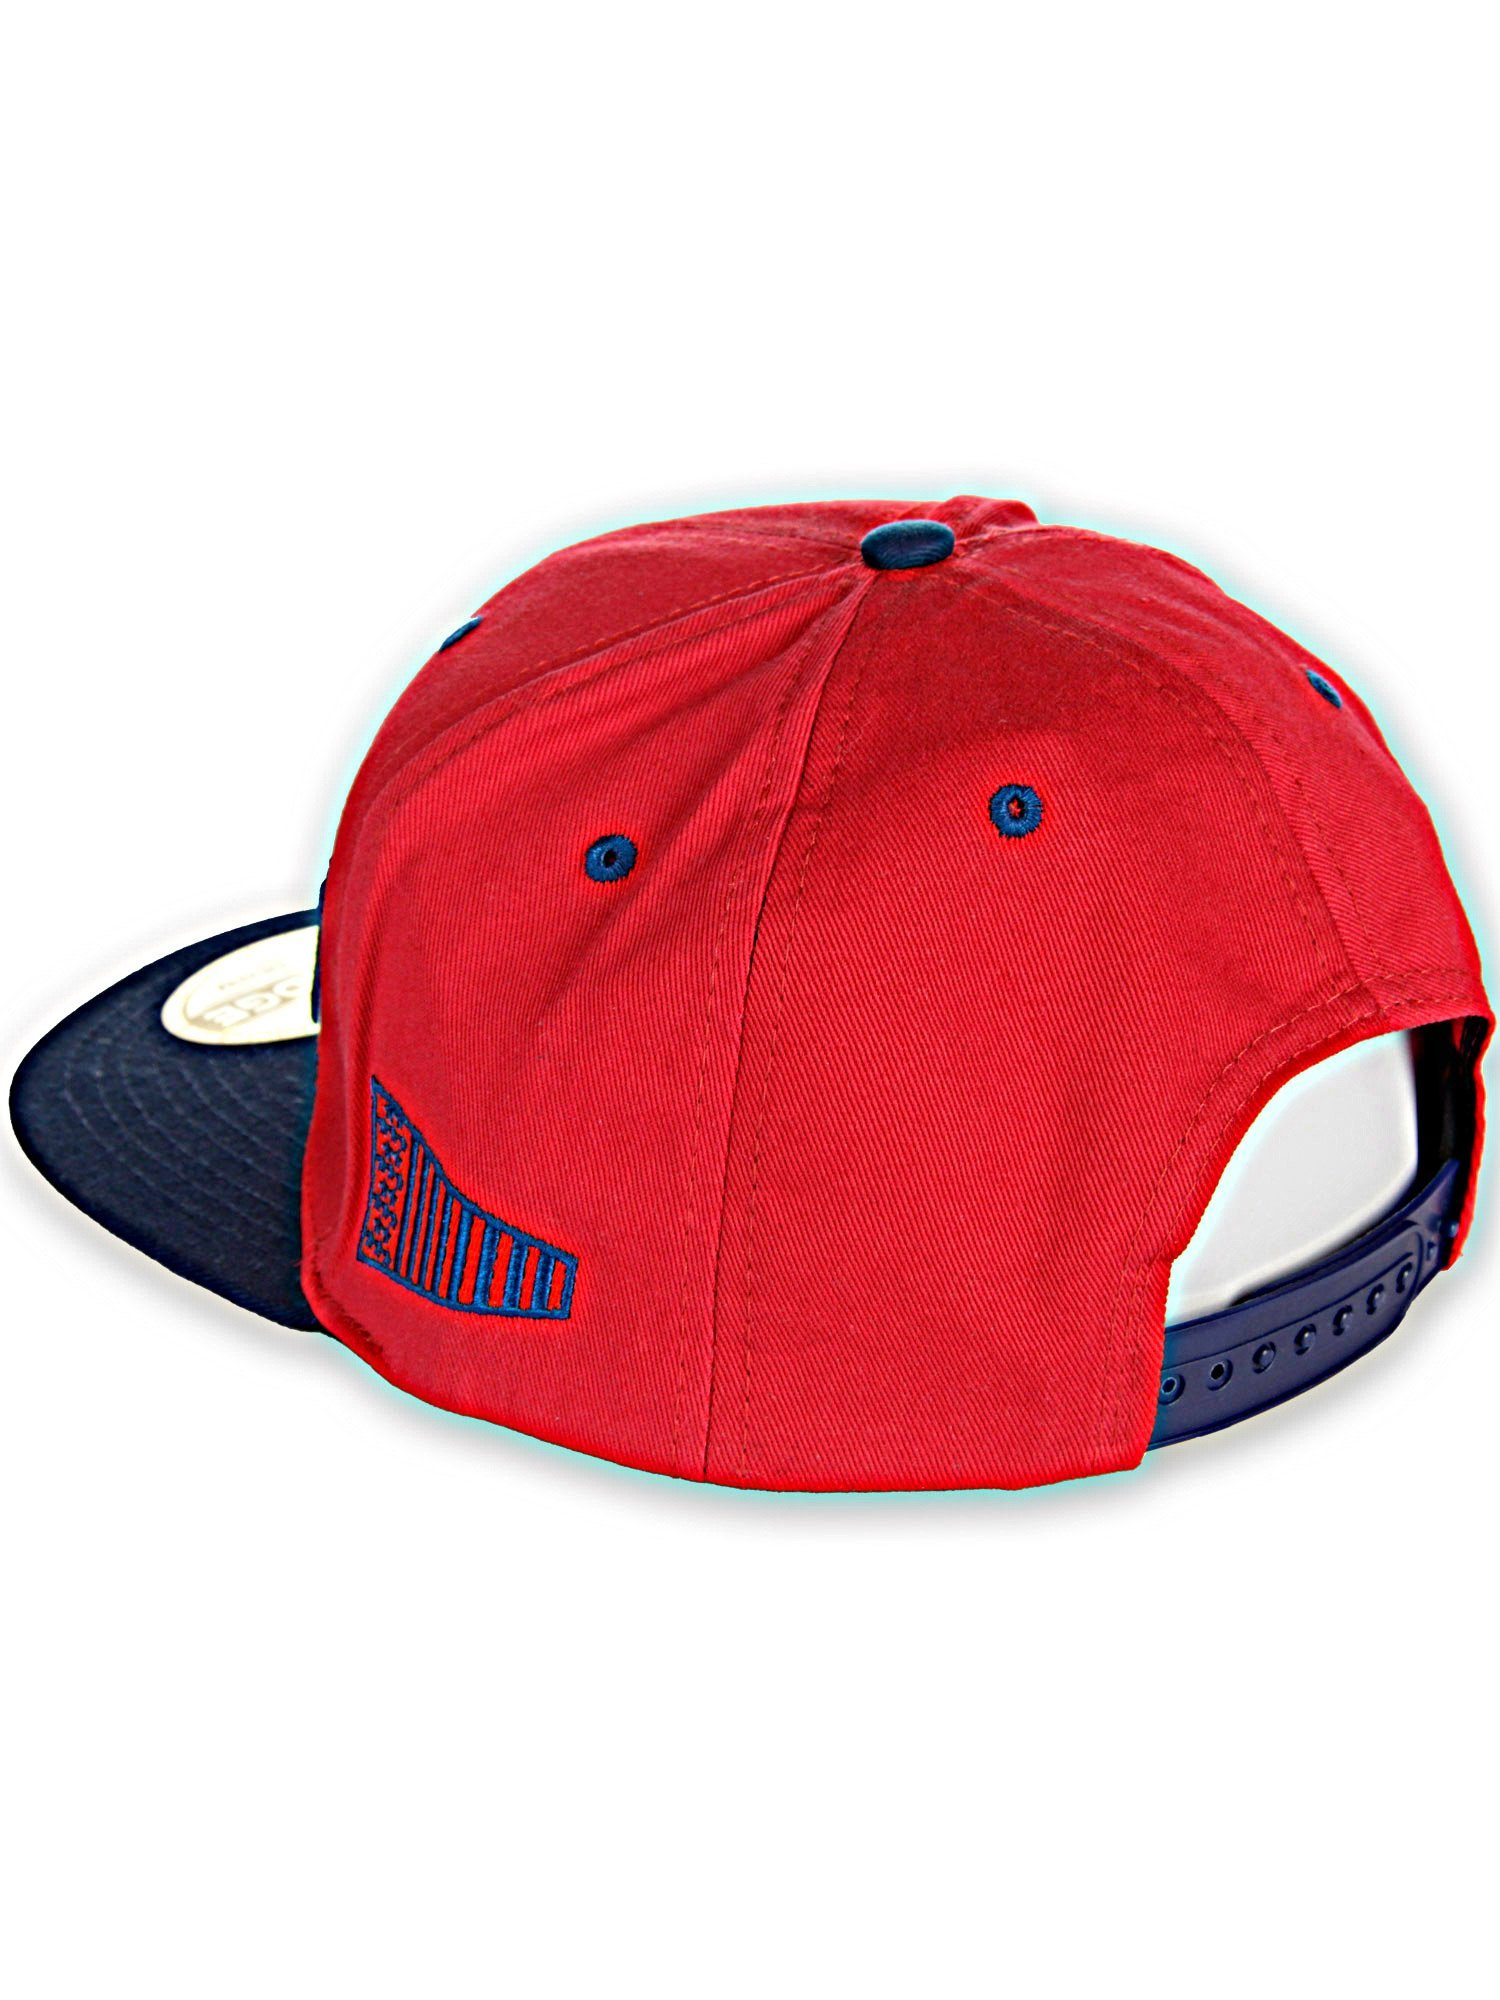 RedBridge Baseball Cap dunkelblau-rot Schirm mit kontrastfarbigem Bootle